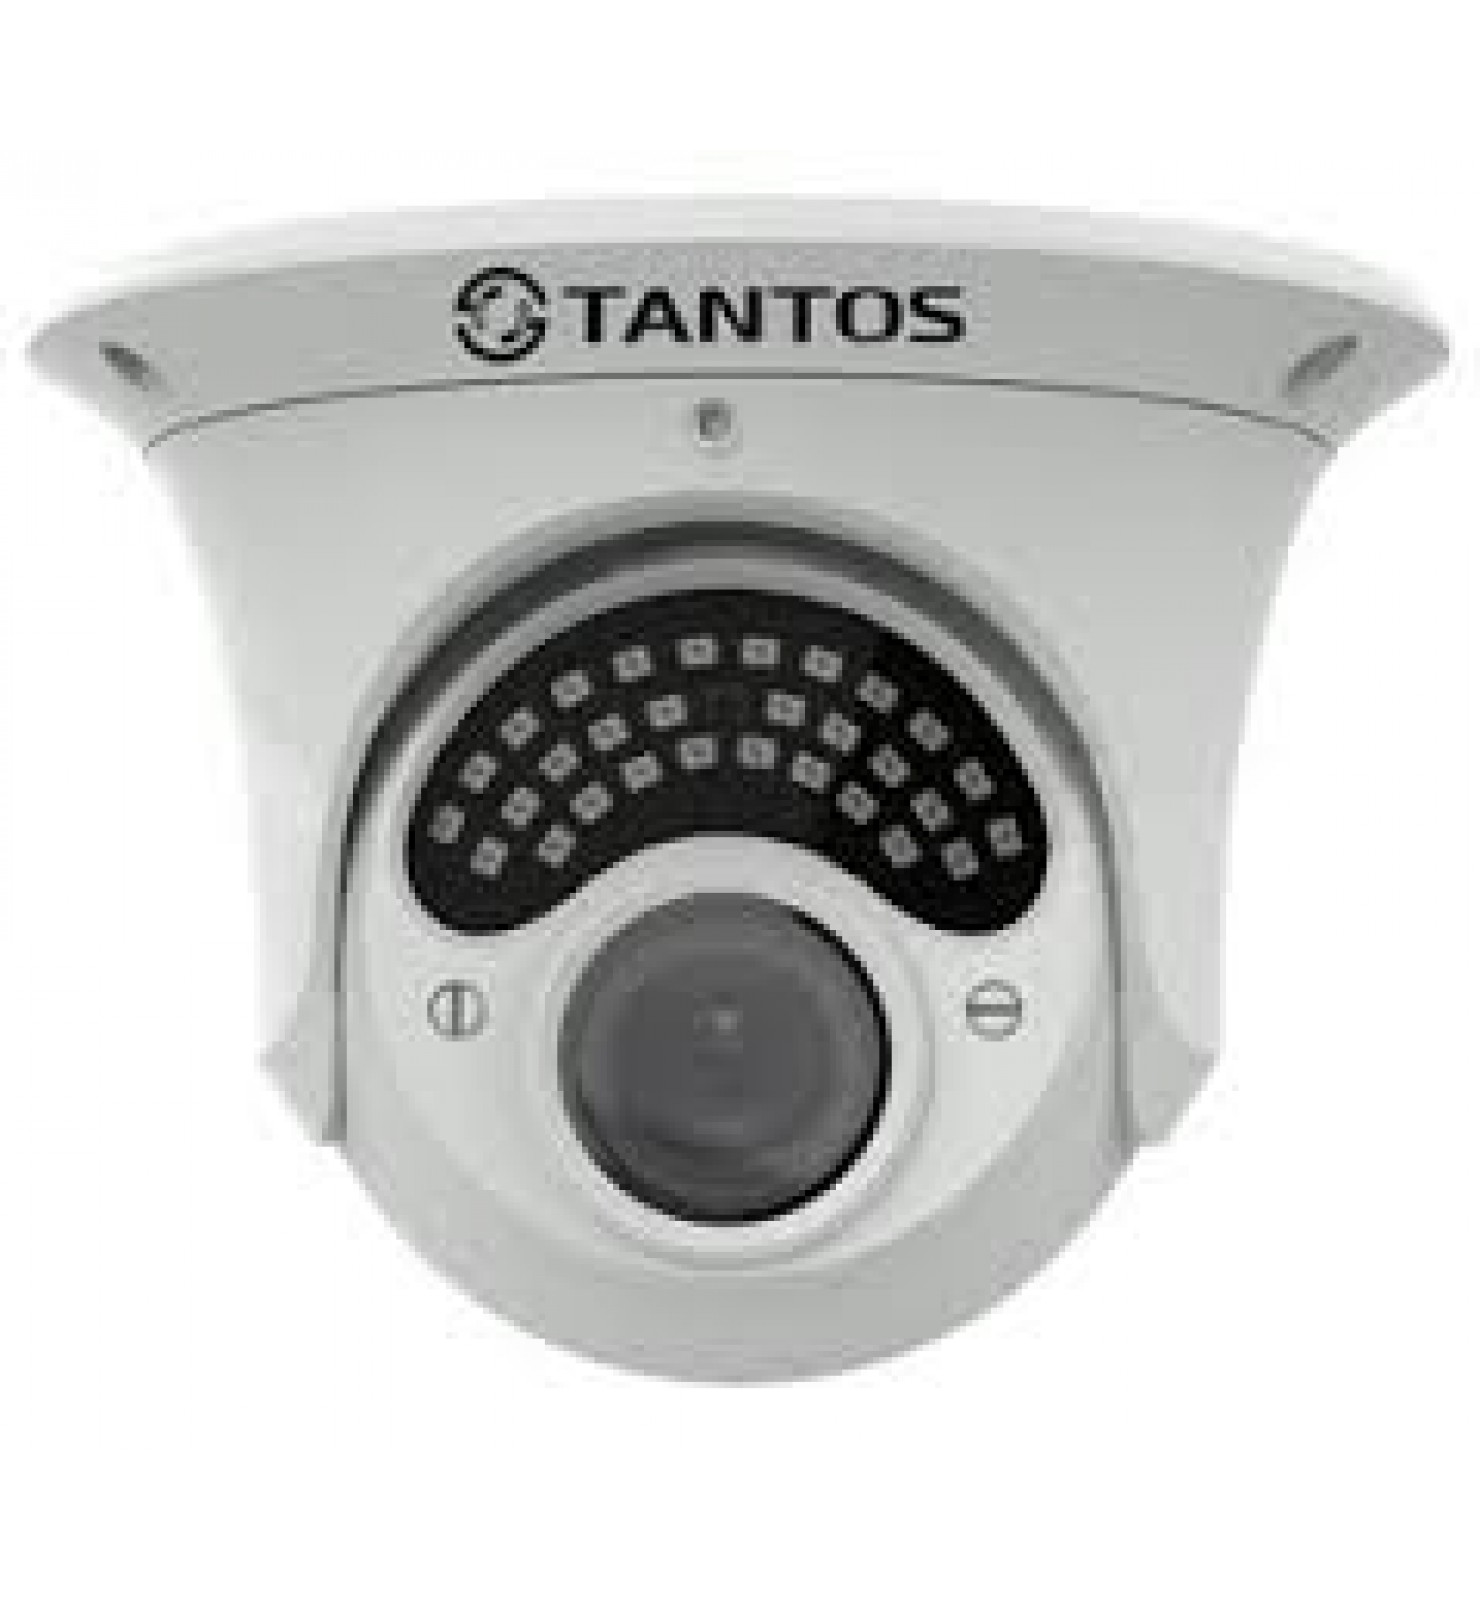 TSc-E1080pUVCv (2.8-12) уличная аналоговая камера видеонаблюдения